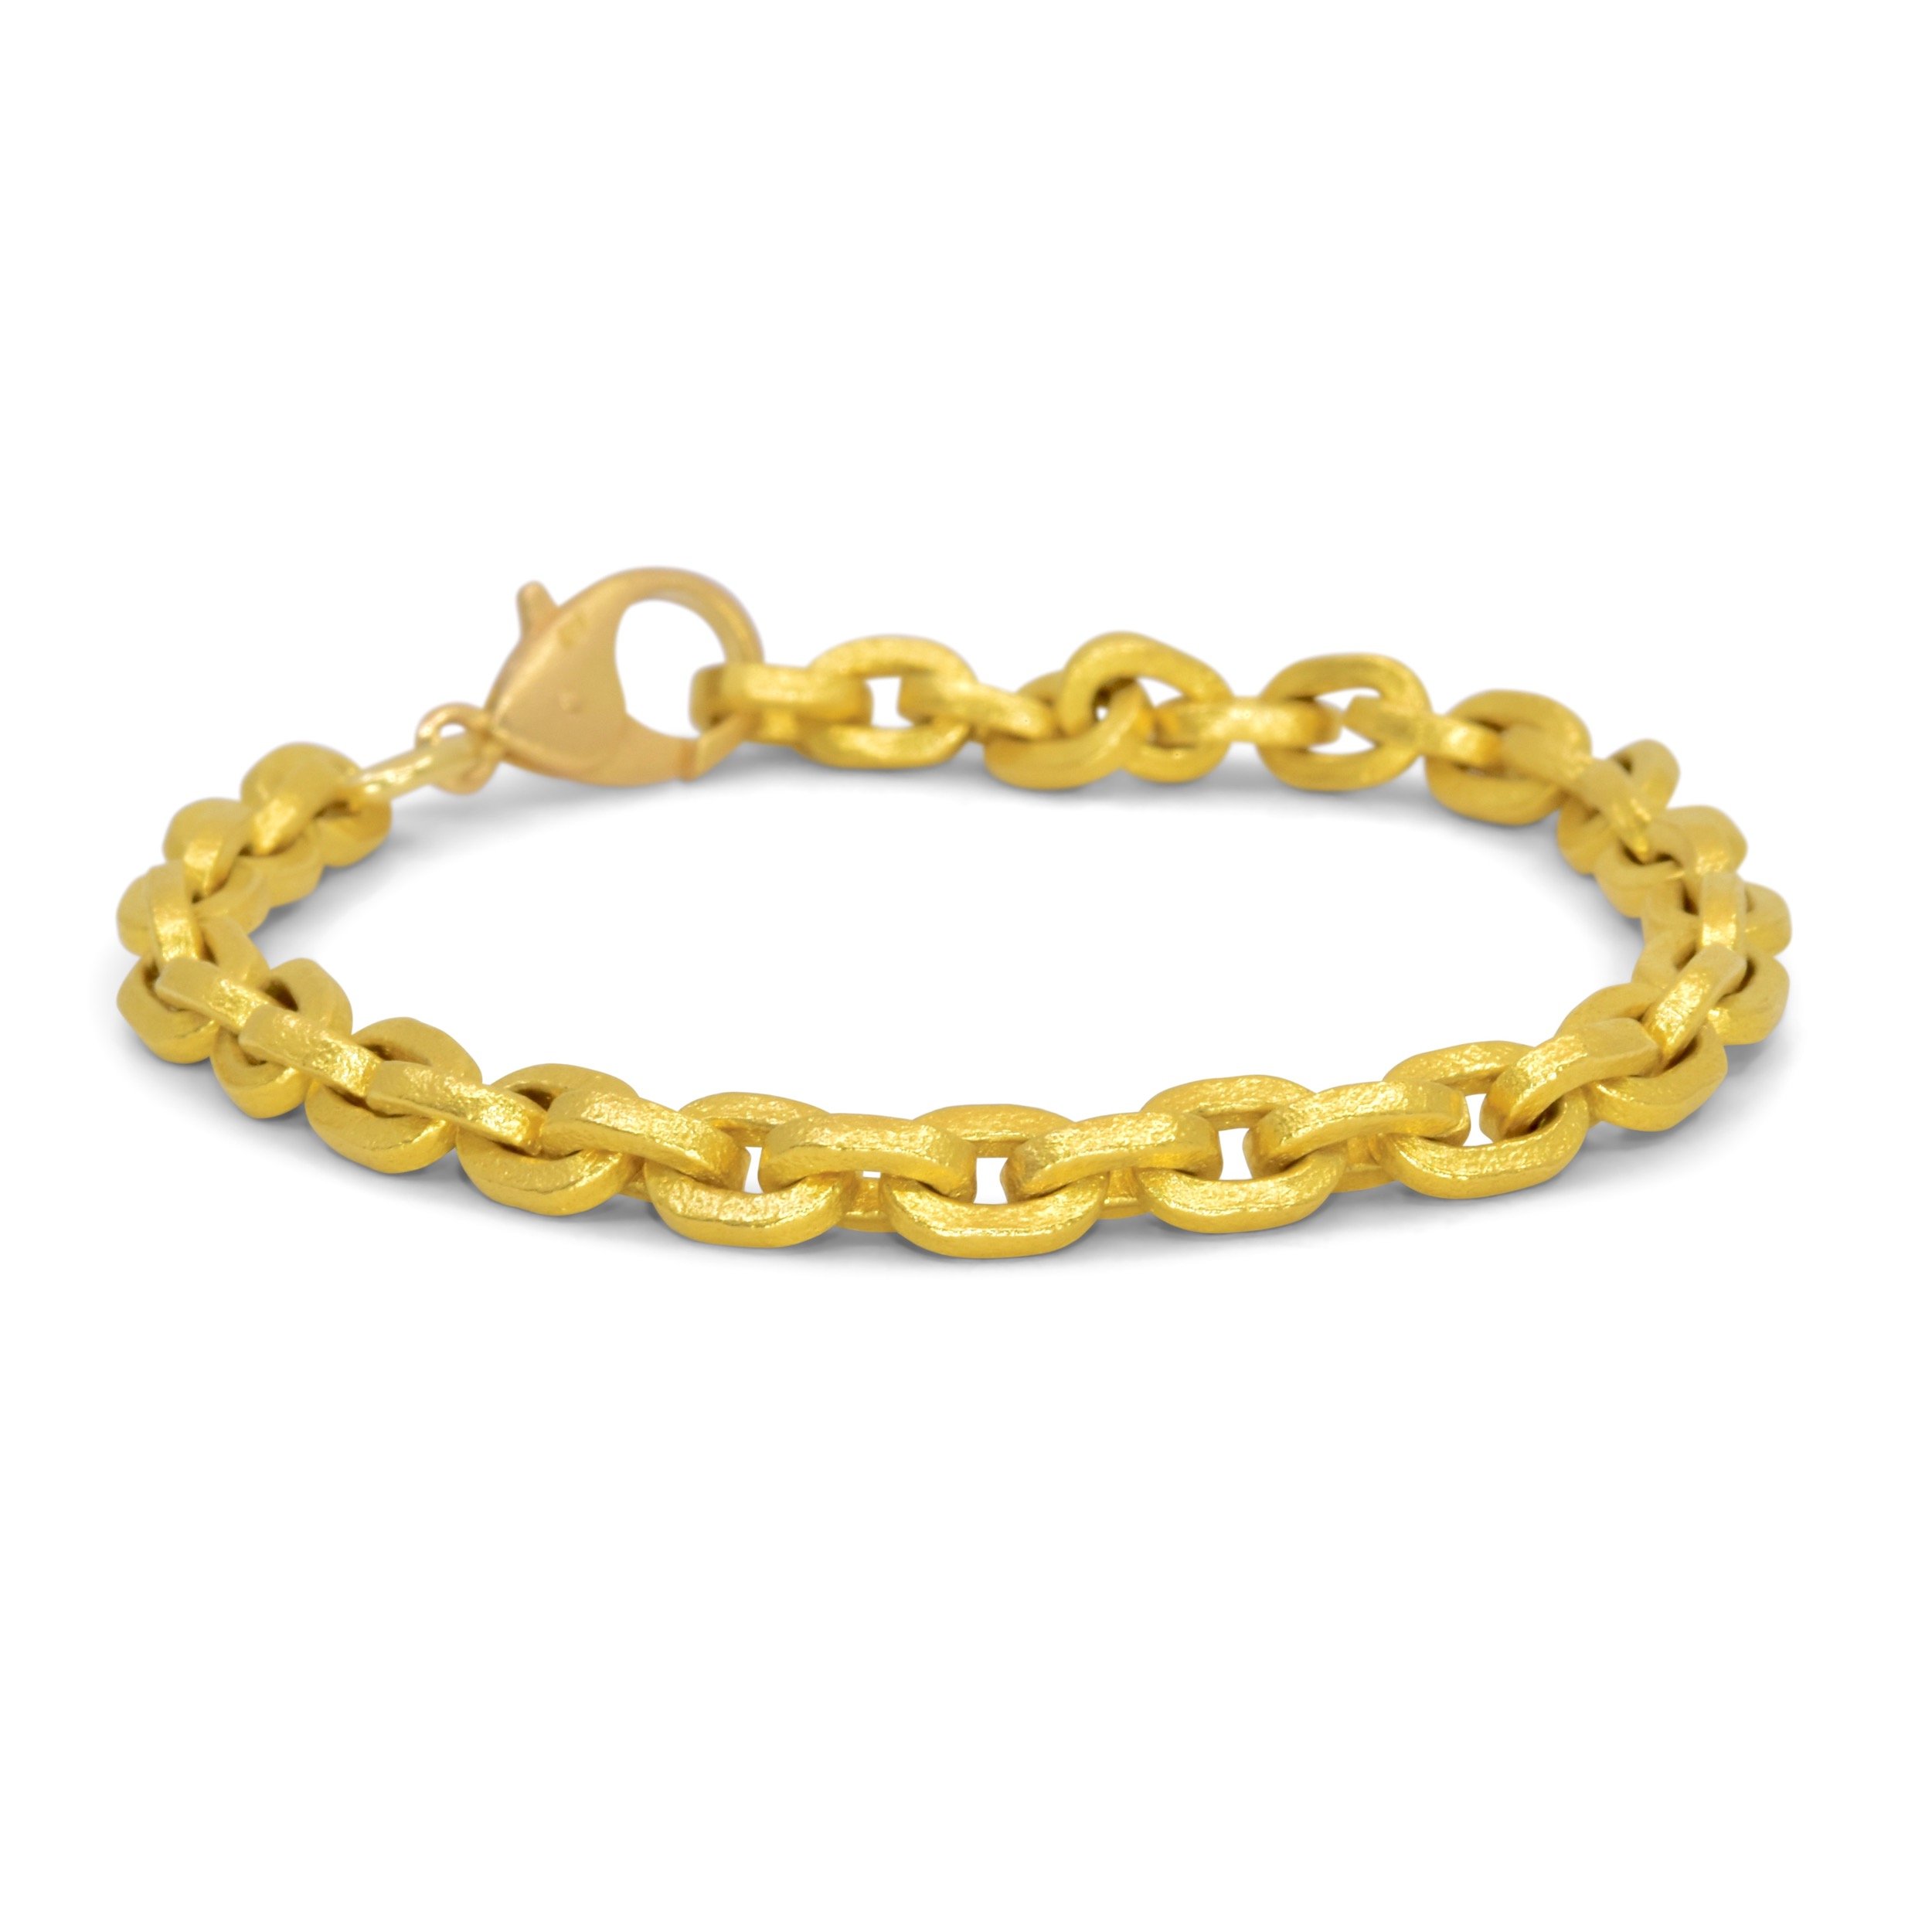 22K Gold Bracelet for Women with Cz & Ruby - 235-GBR2621 in 12.050 Grams